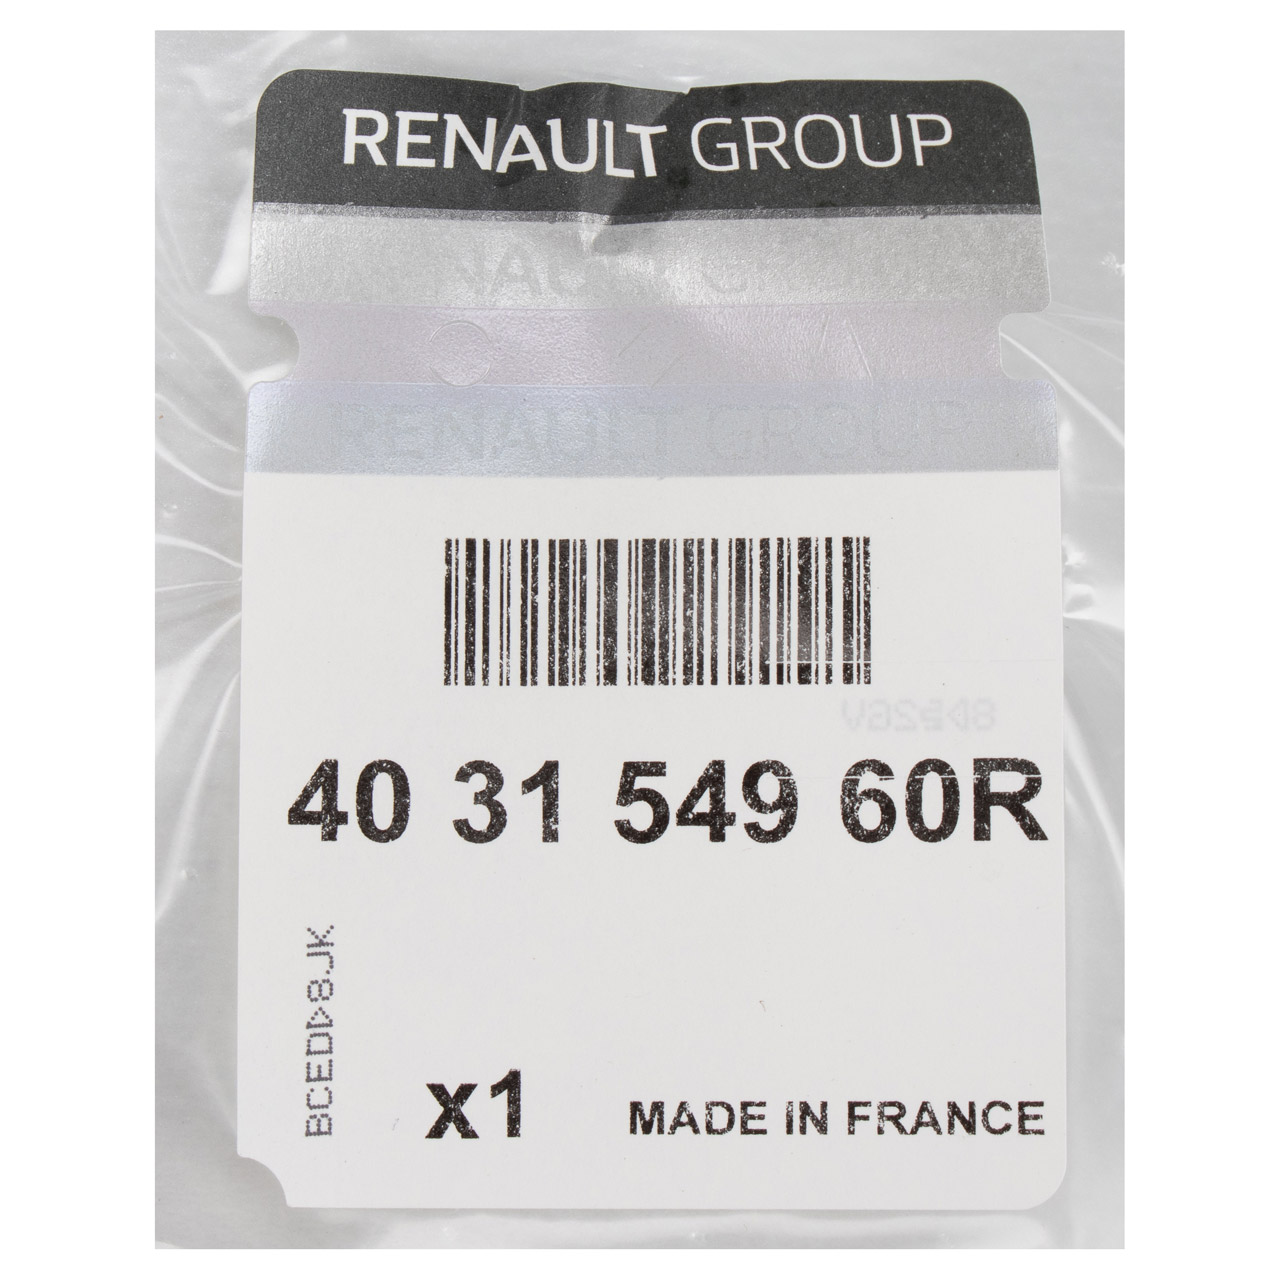 1x ORIGINAL Renault Radkappe Radblende 16 Zoll Silber Megane 4 403154960R